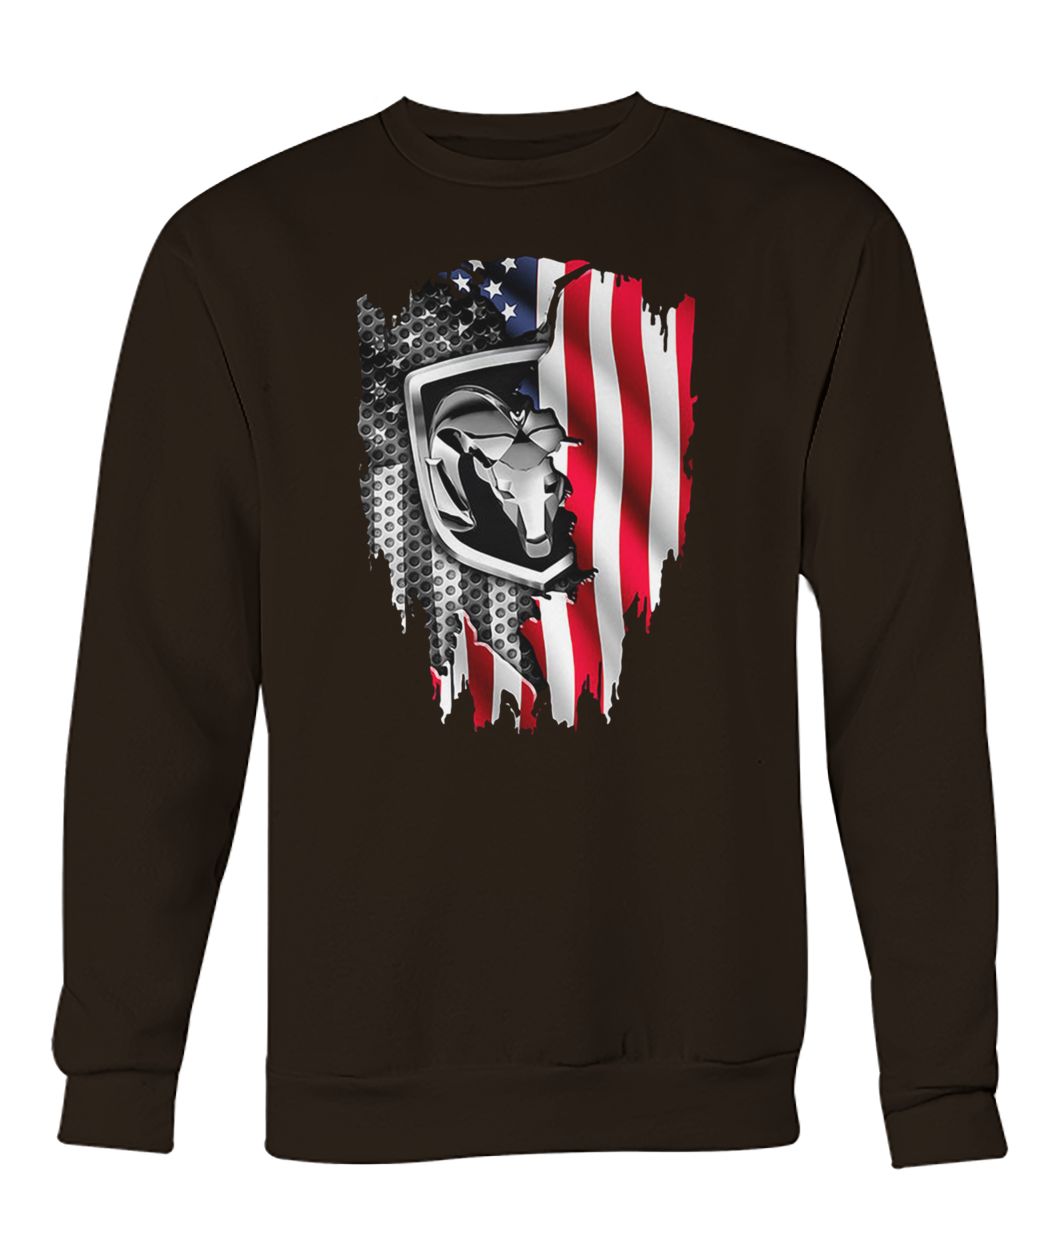 Dodge ram american flag crew neck sweatshirt